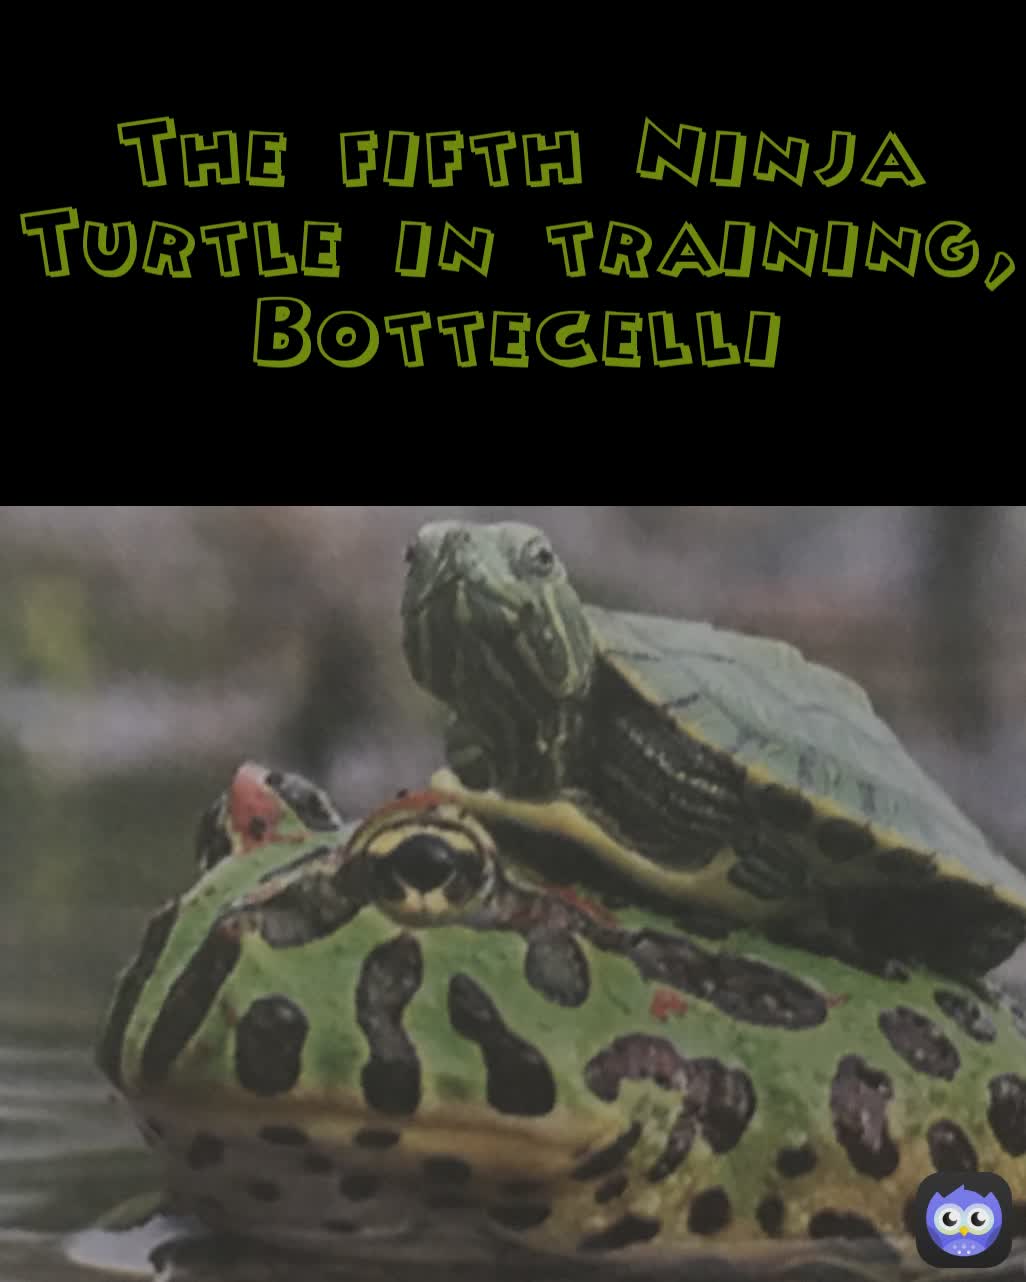 The fifth Ninja Turtle in training, Bottecelli